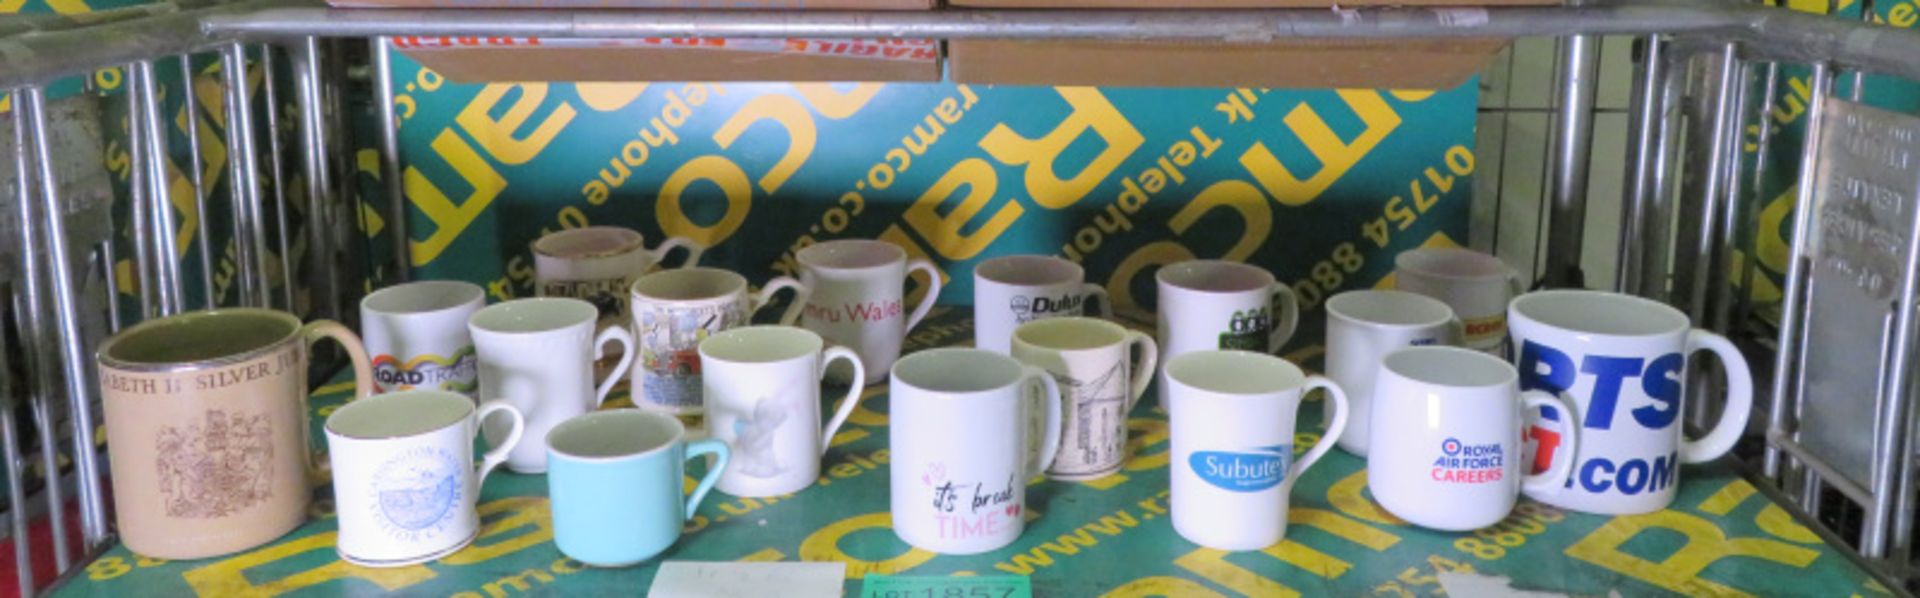 Selection of novelty mugs